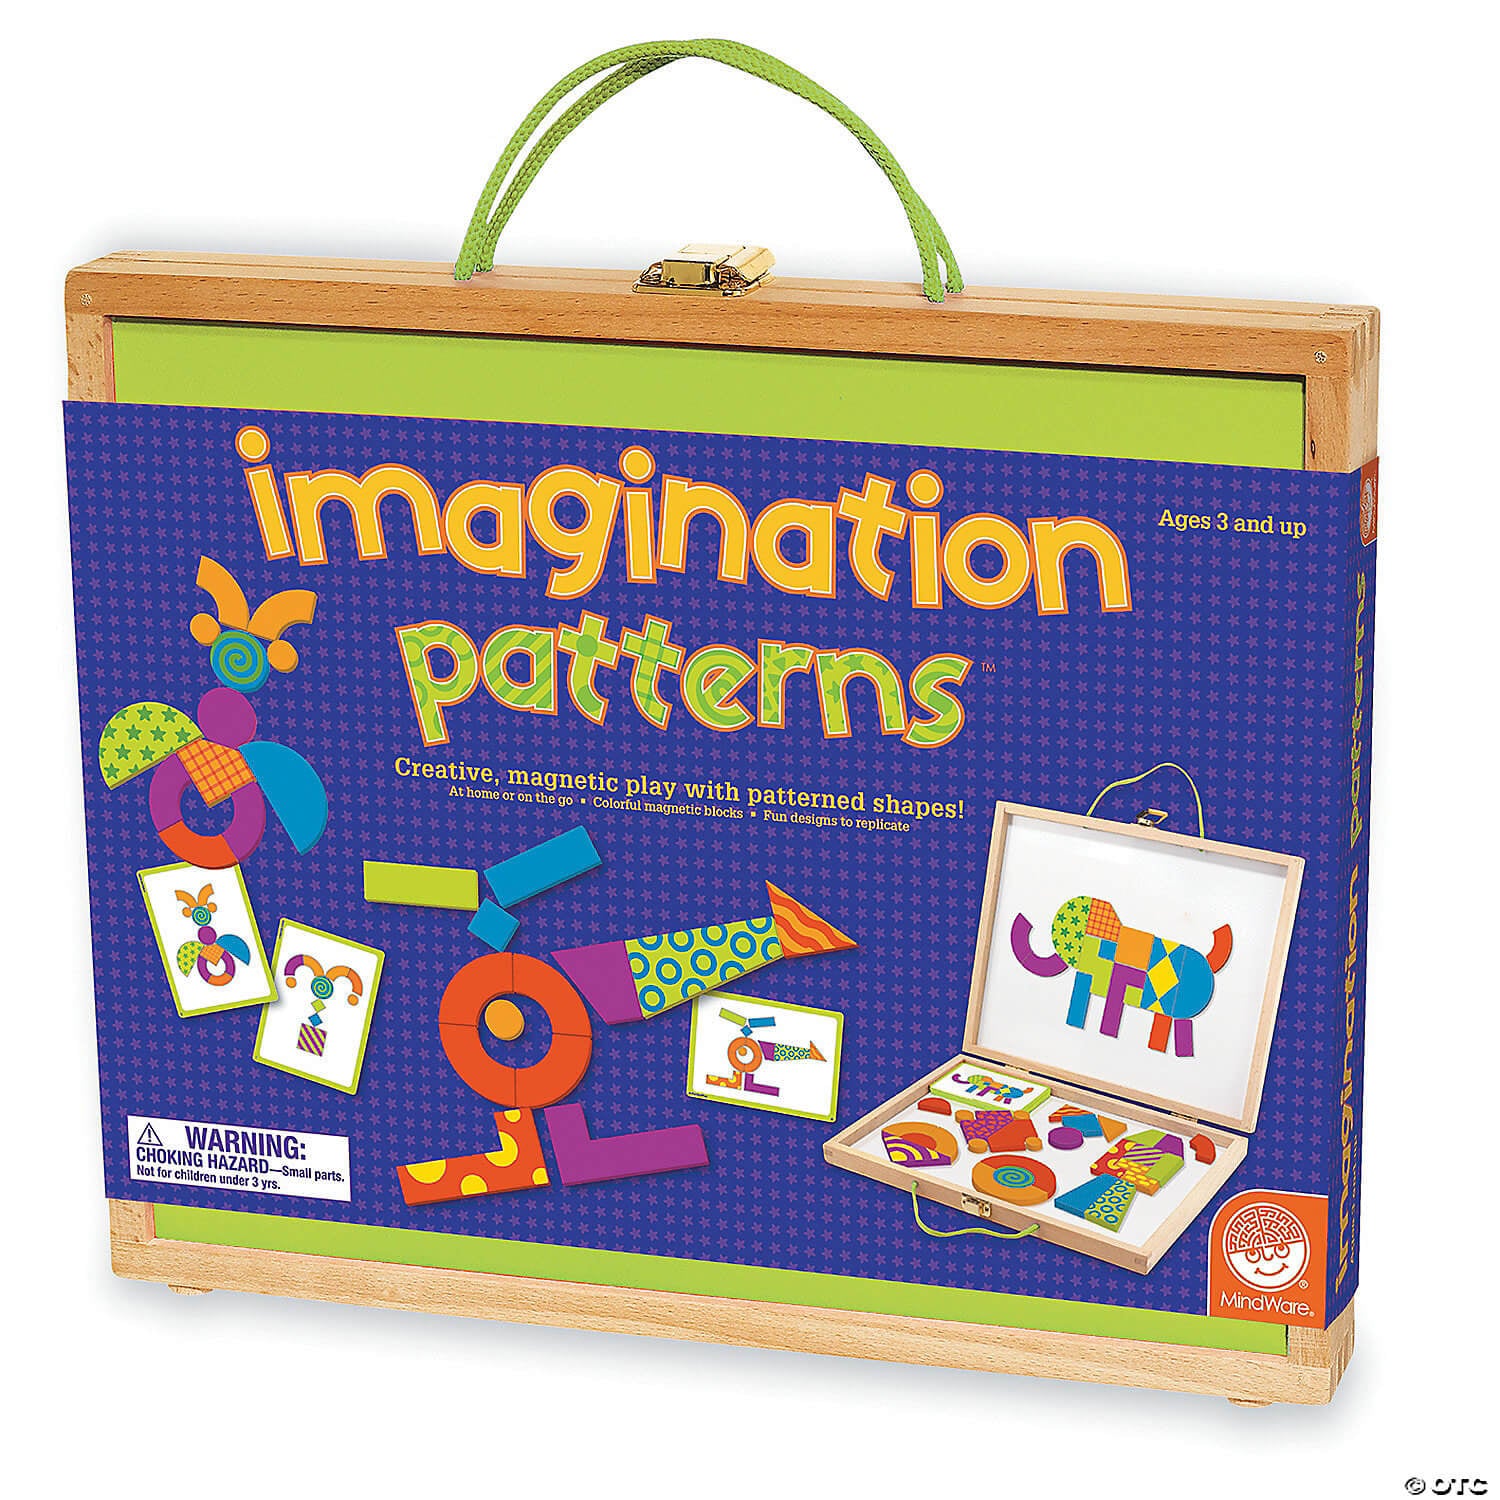 Intelligent Magnetic Books For Kids Imagination Jigsaw Game Brain Training  Educational Toys For Children 3 Years Old Kids Gift